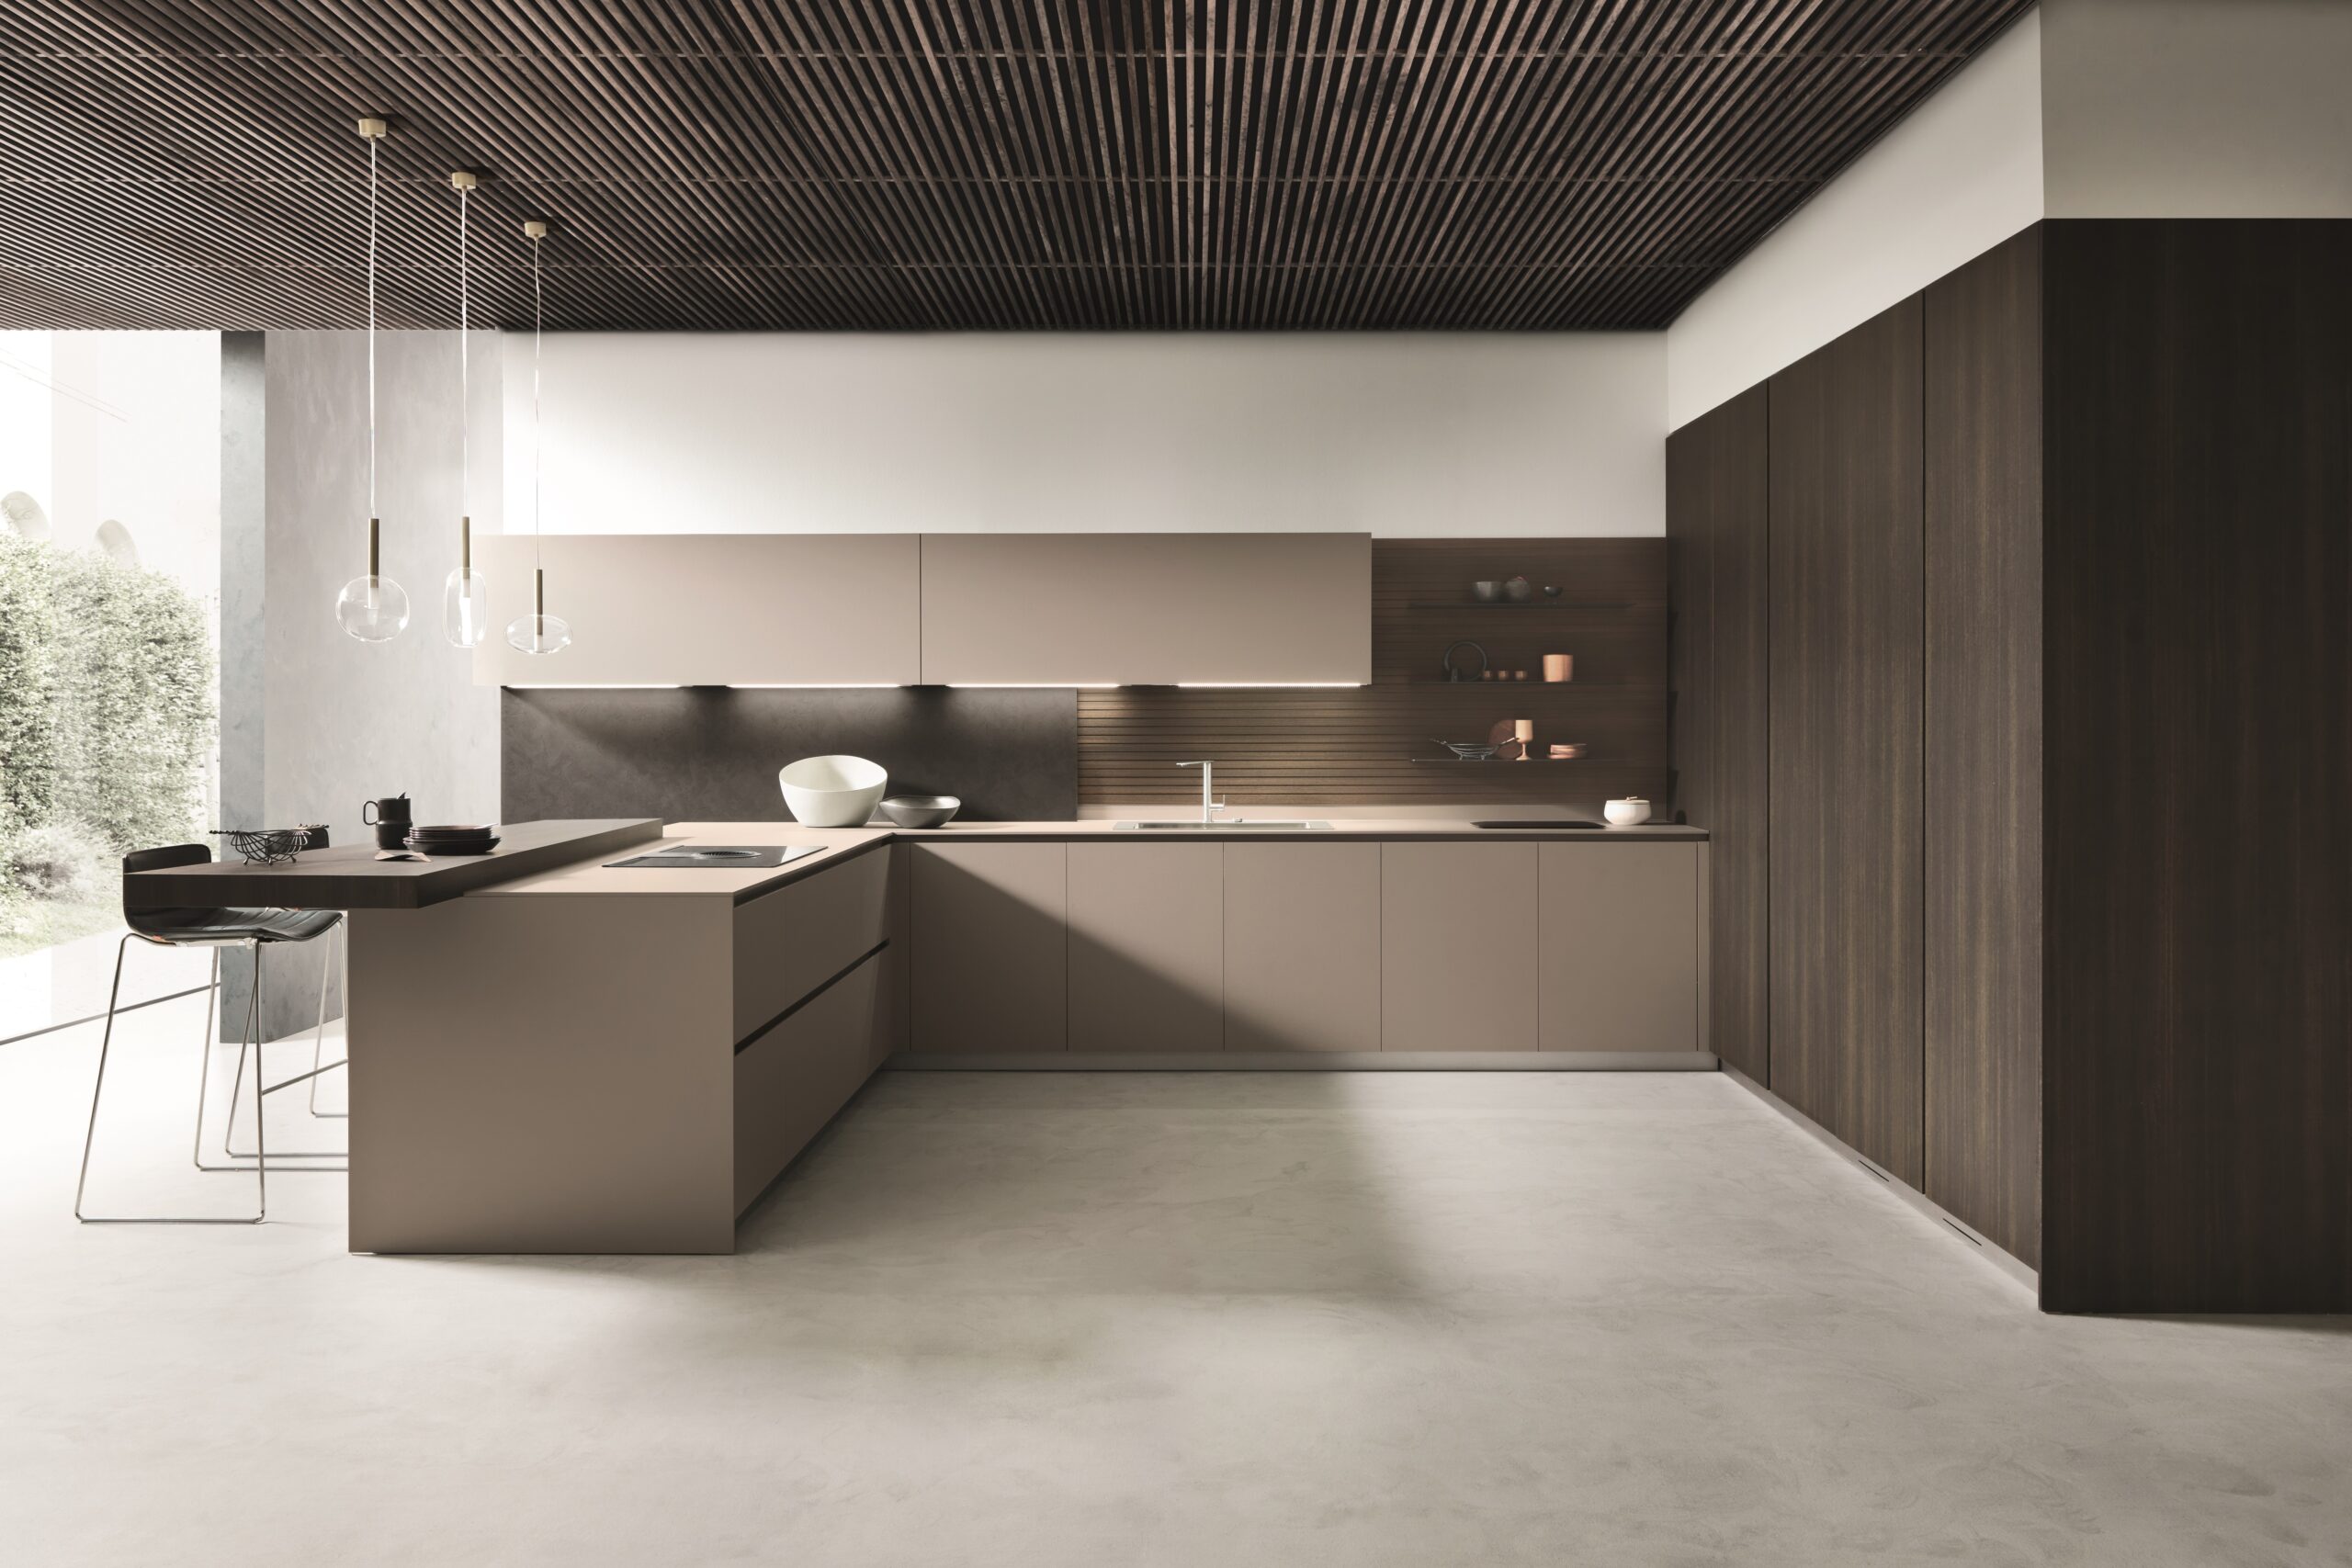 Professional-grade stove and sleek kitchen island in a luxury modern kitchen